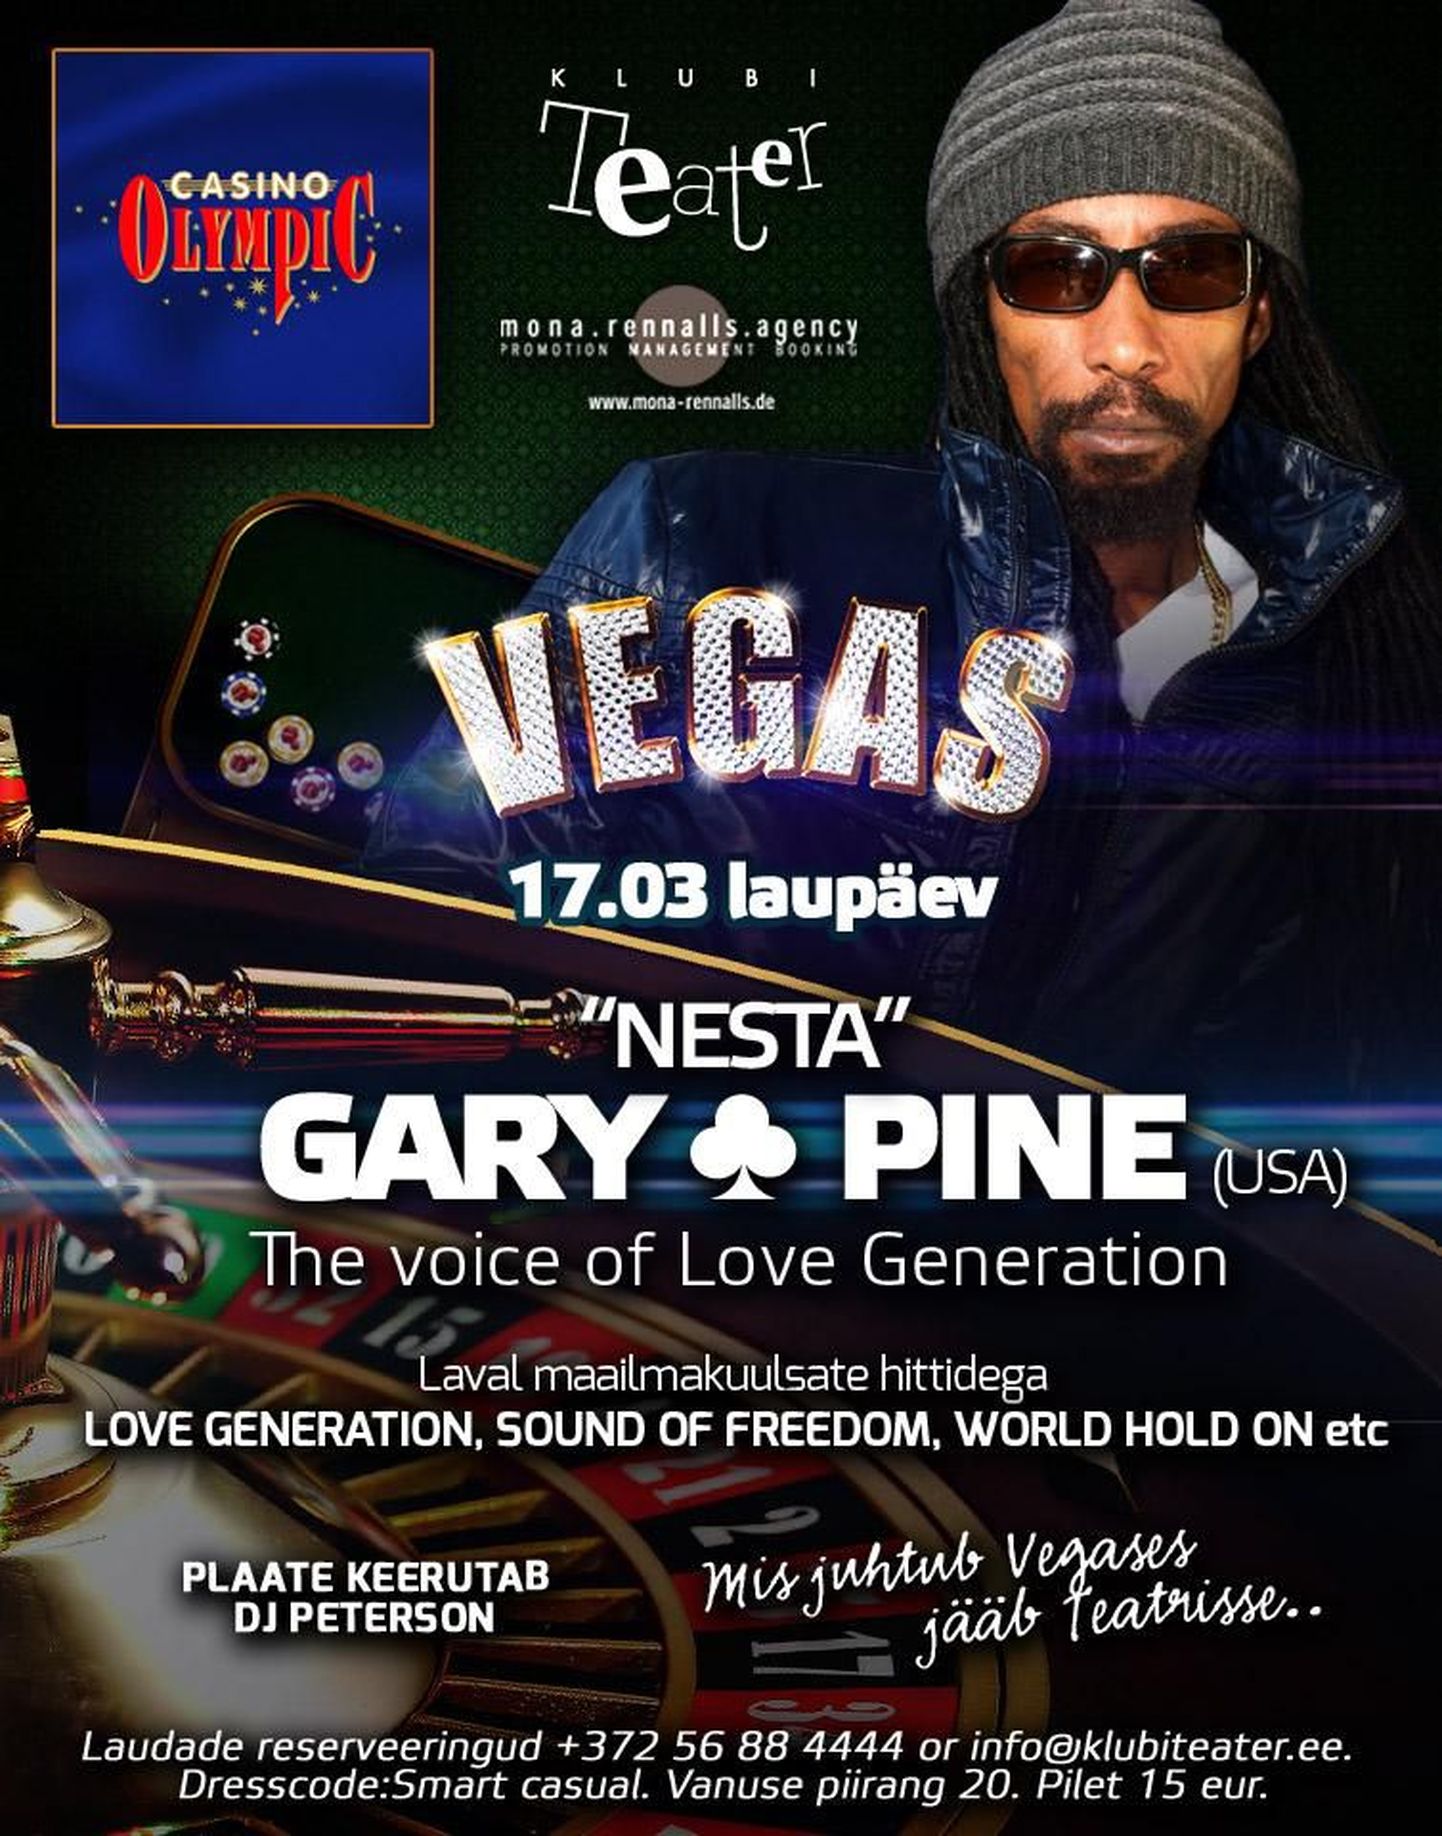 Laupäev 17.03 Vegas esitleb  - klubimuusika superstaar GARY ‘NESTA’ PINE (USA) – The Voice of LOVE GENERATION Klubis Teater